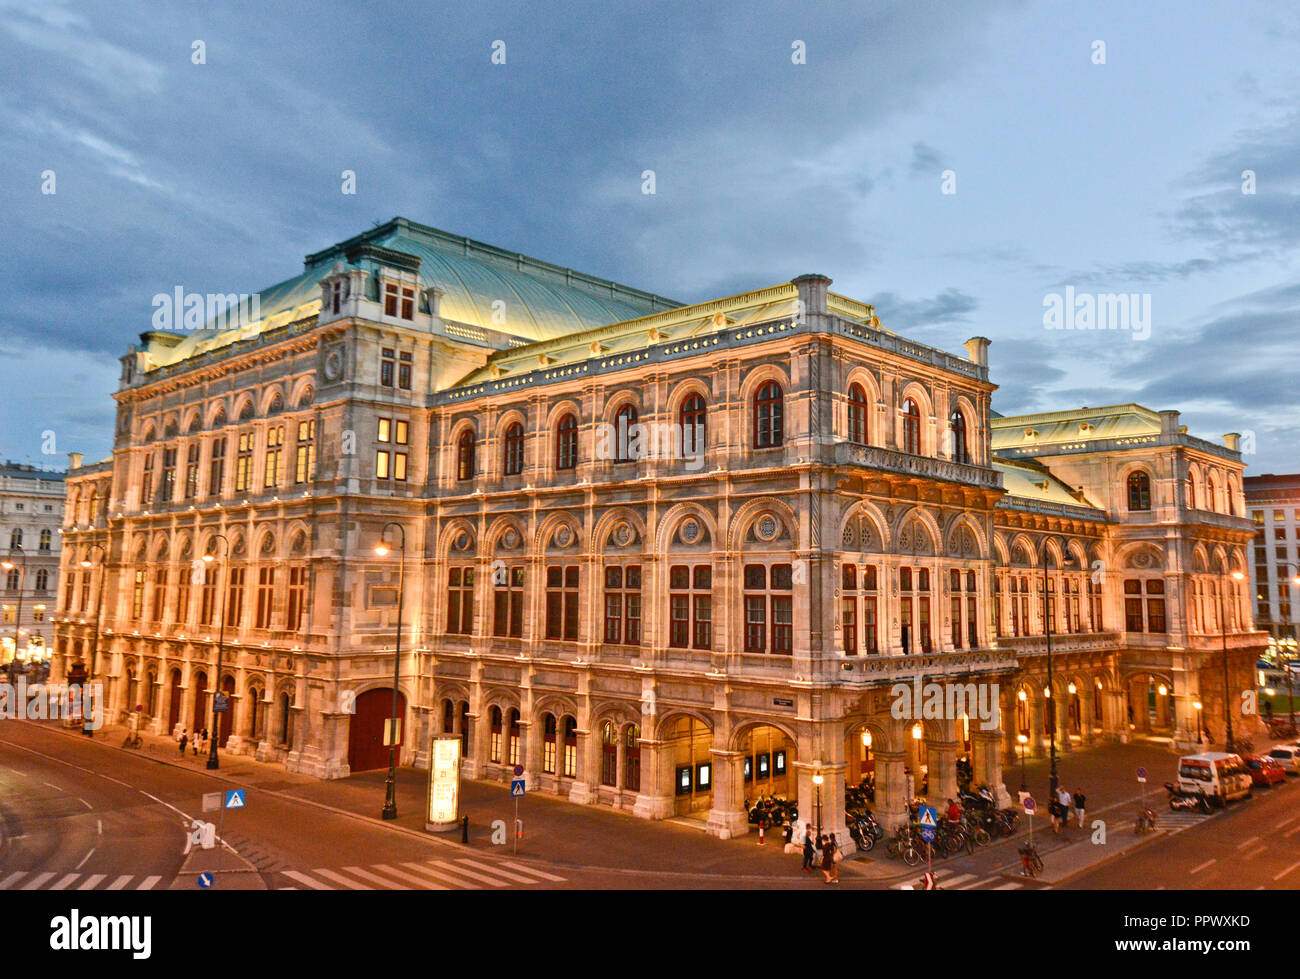 Vienna State Opera at twilight, Austria Stock Photo